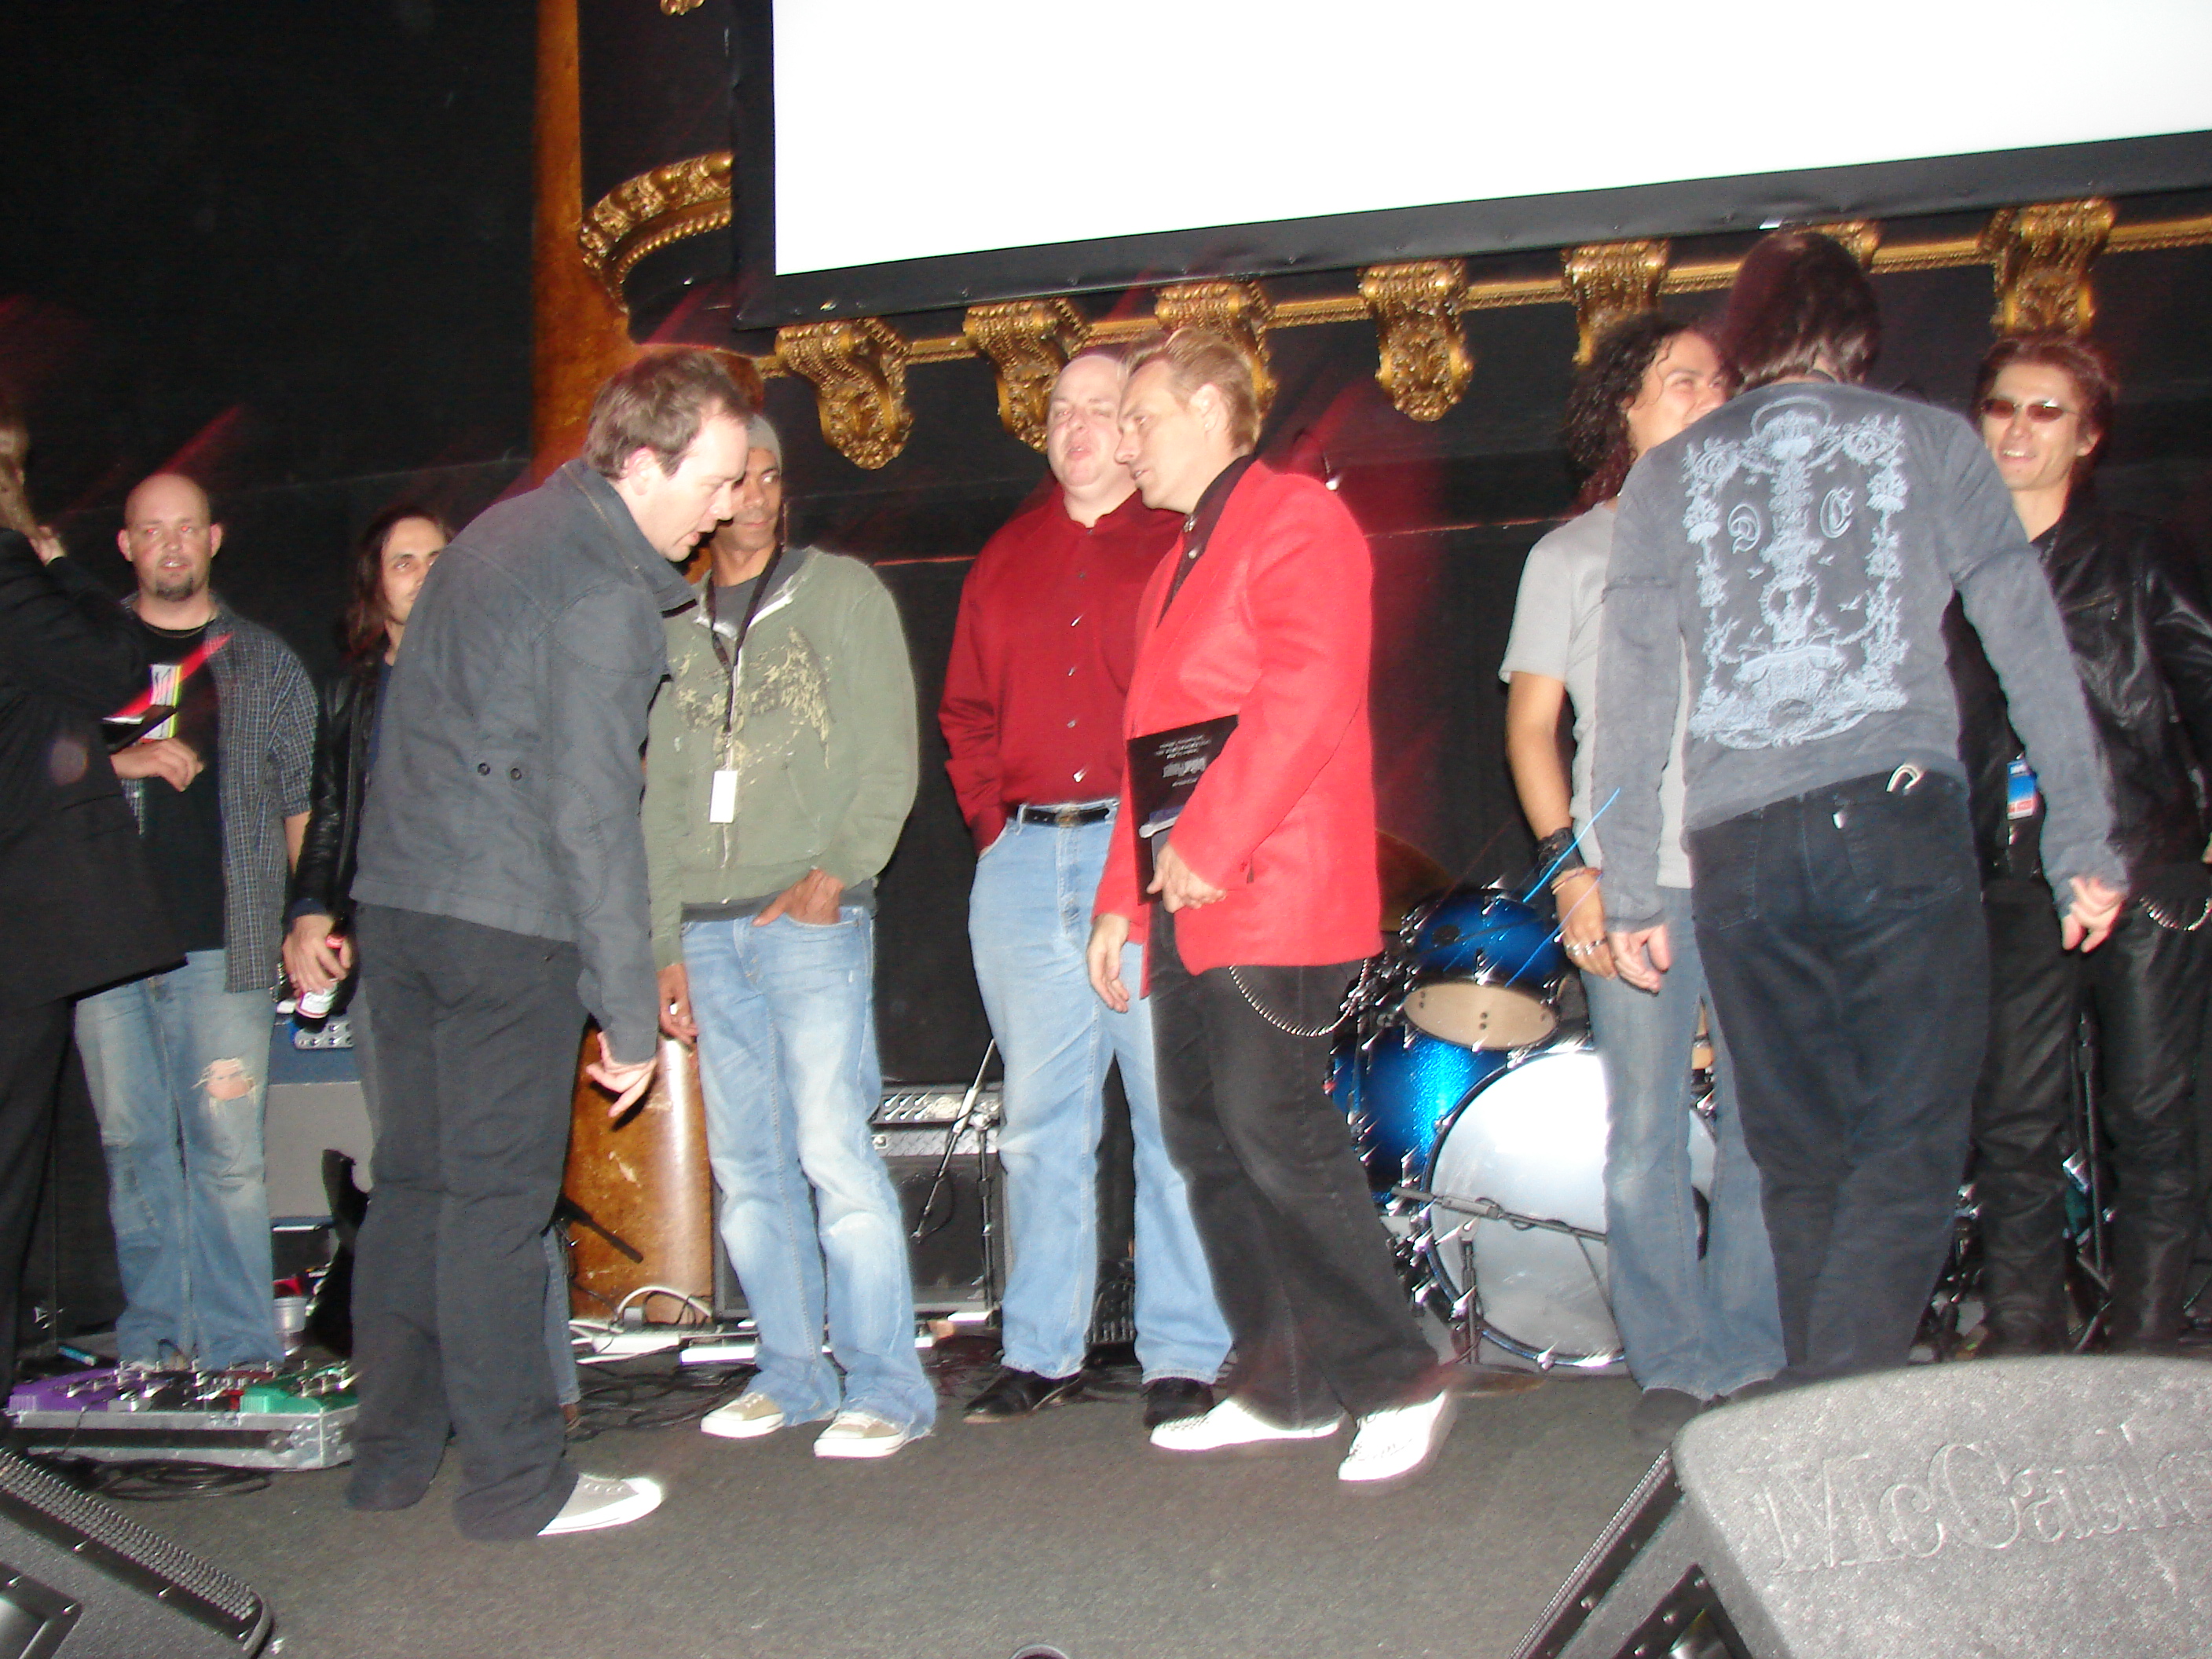 @guitar hero 2007 Nuno, Greg Howe, Joe Satriani, Steve Lukather,Mike Varney were as guest judge. taka played AngelWing in 2007 San Francisco